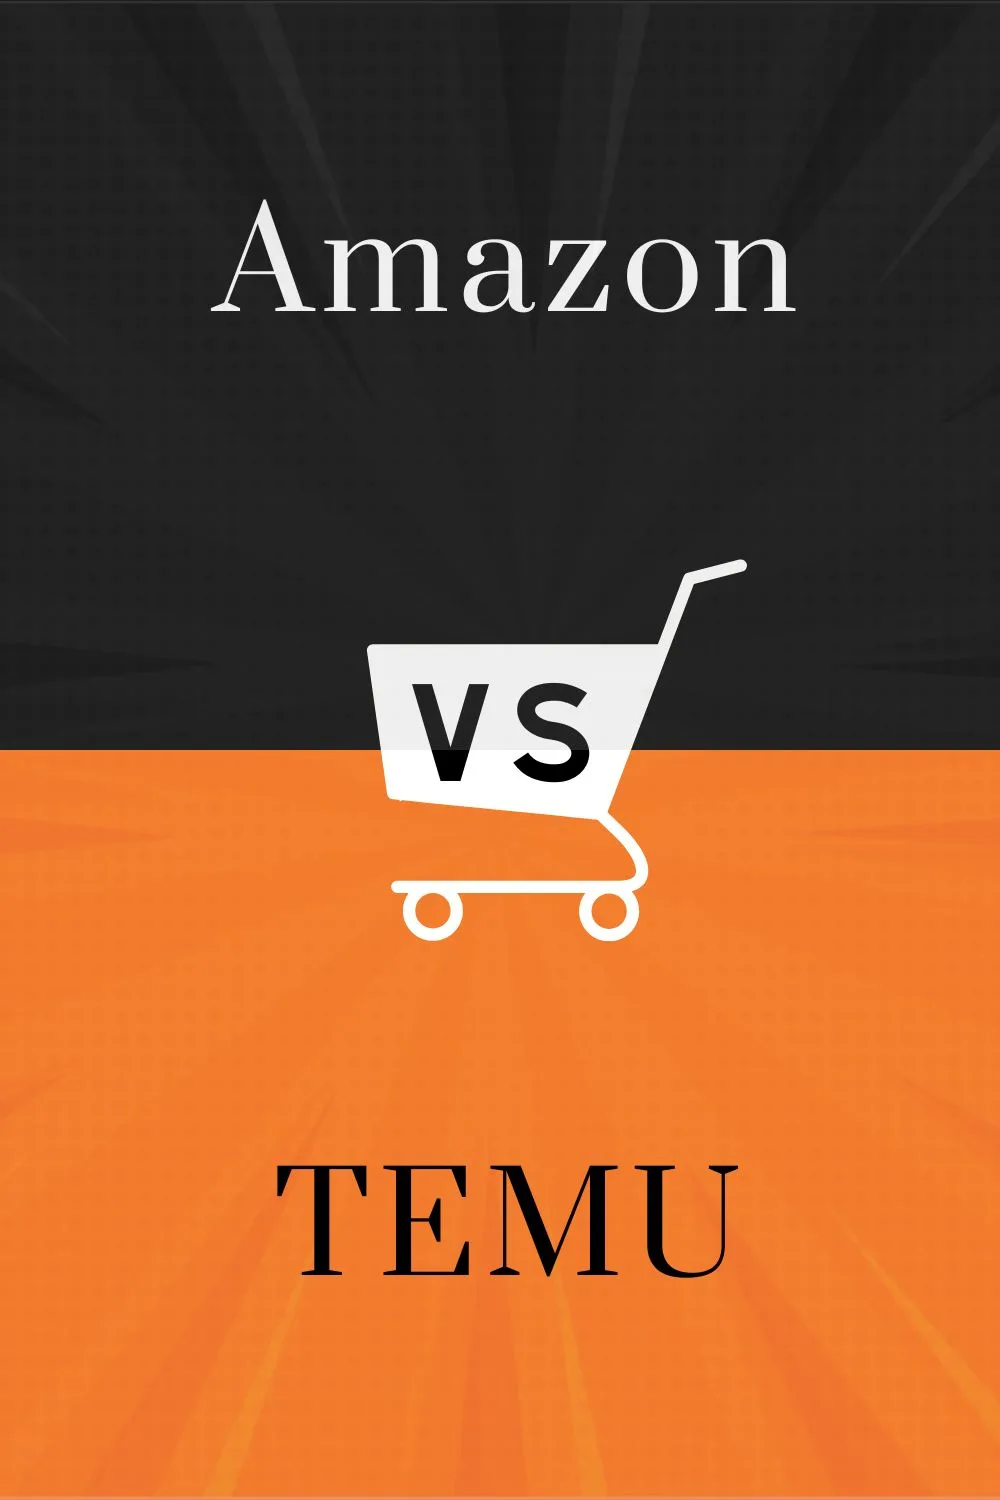 Deciding between Amazon and Temu